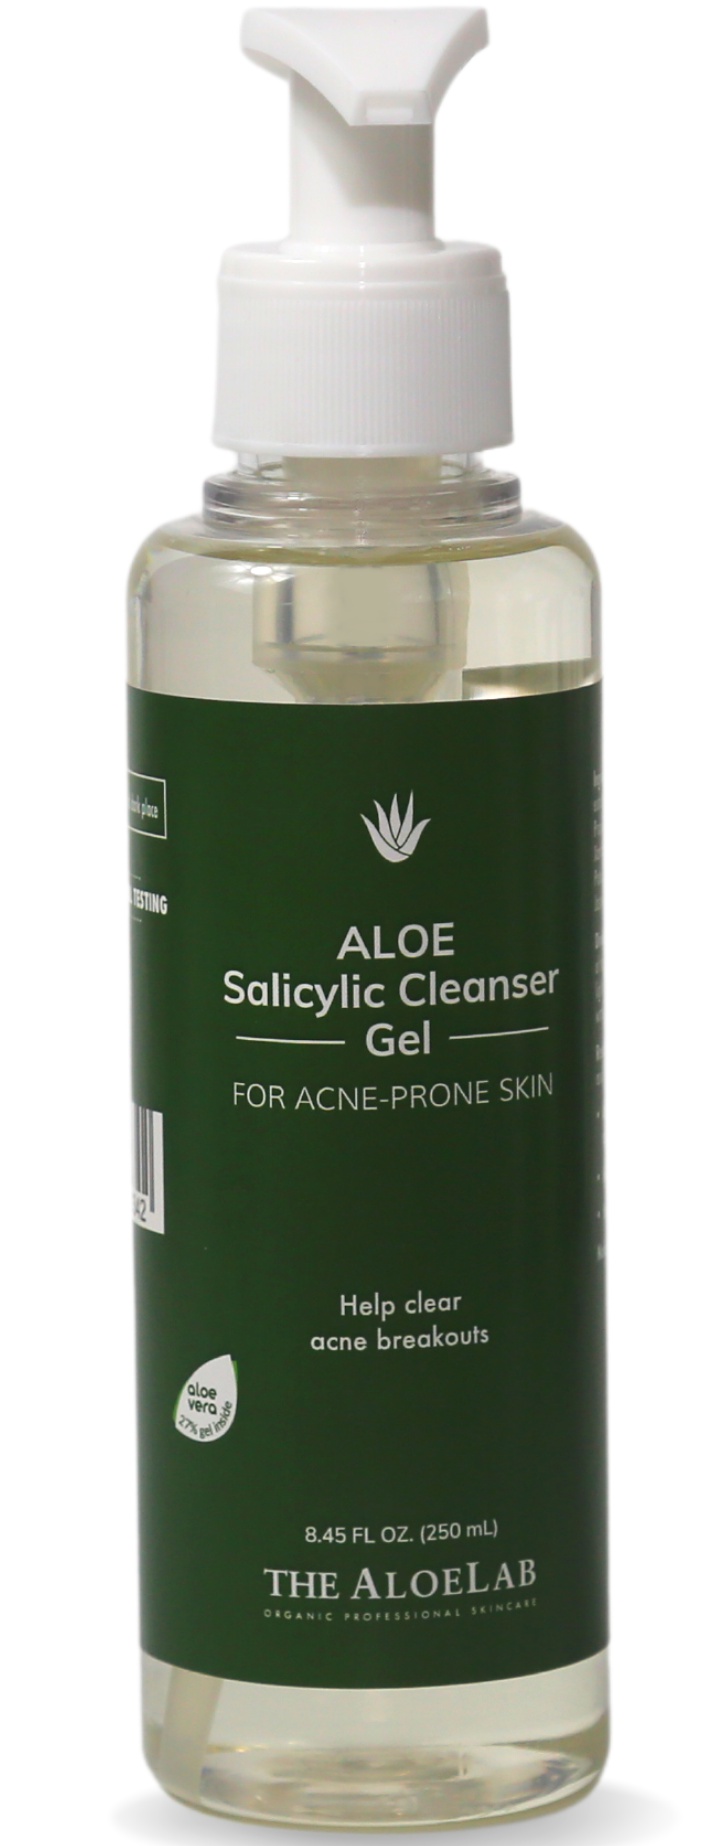 The AloeLab Aloe Salicylic Cleanser